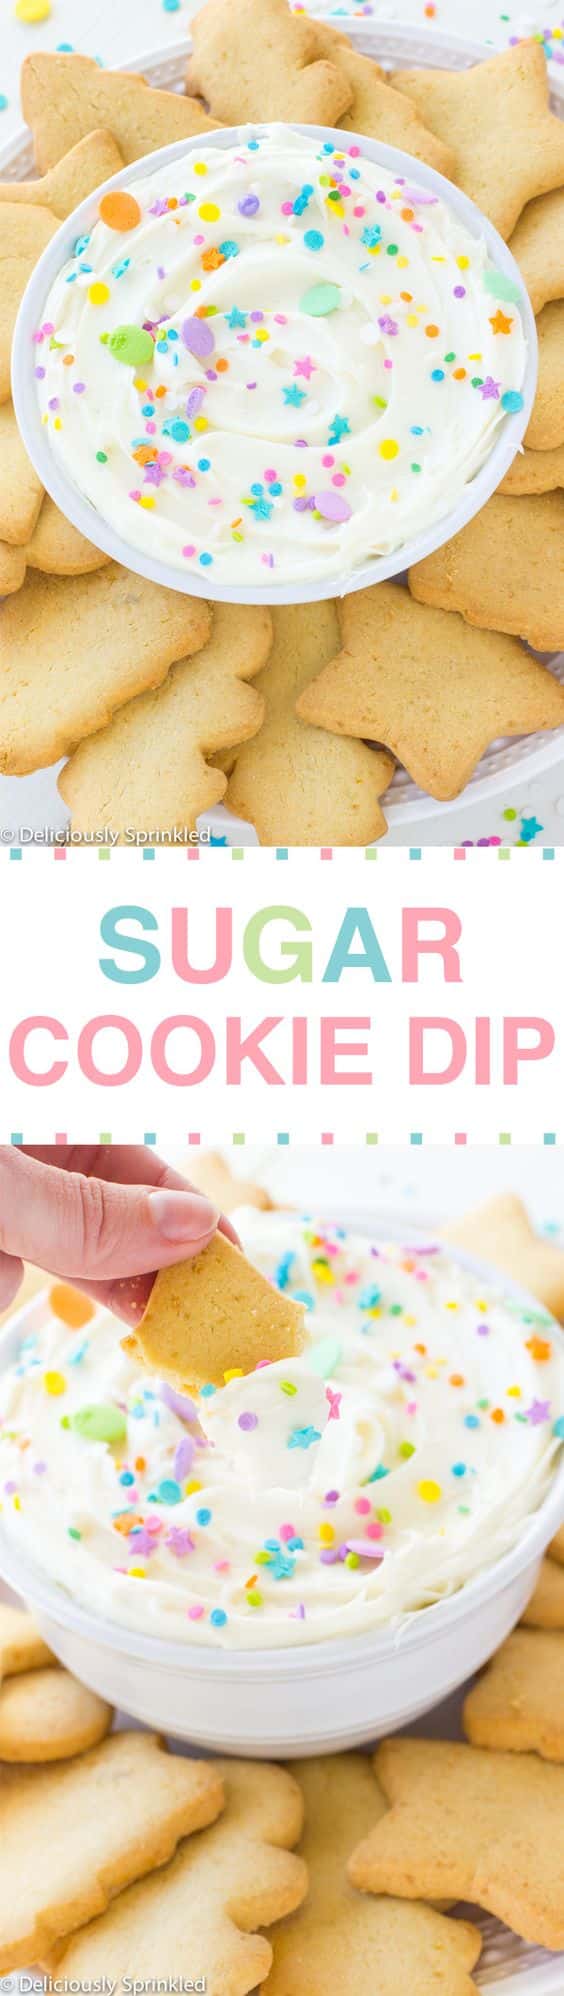 Sugar Cookie Dip Recipe